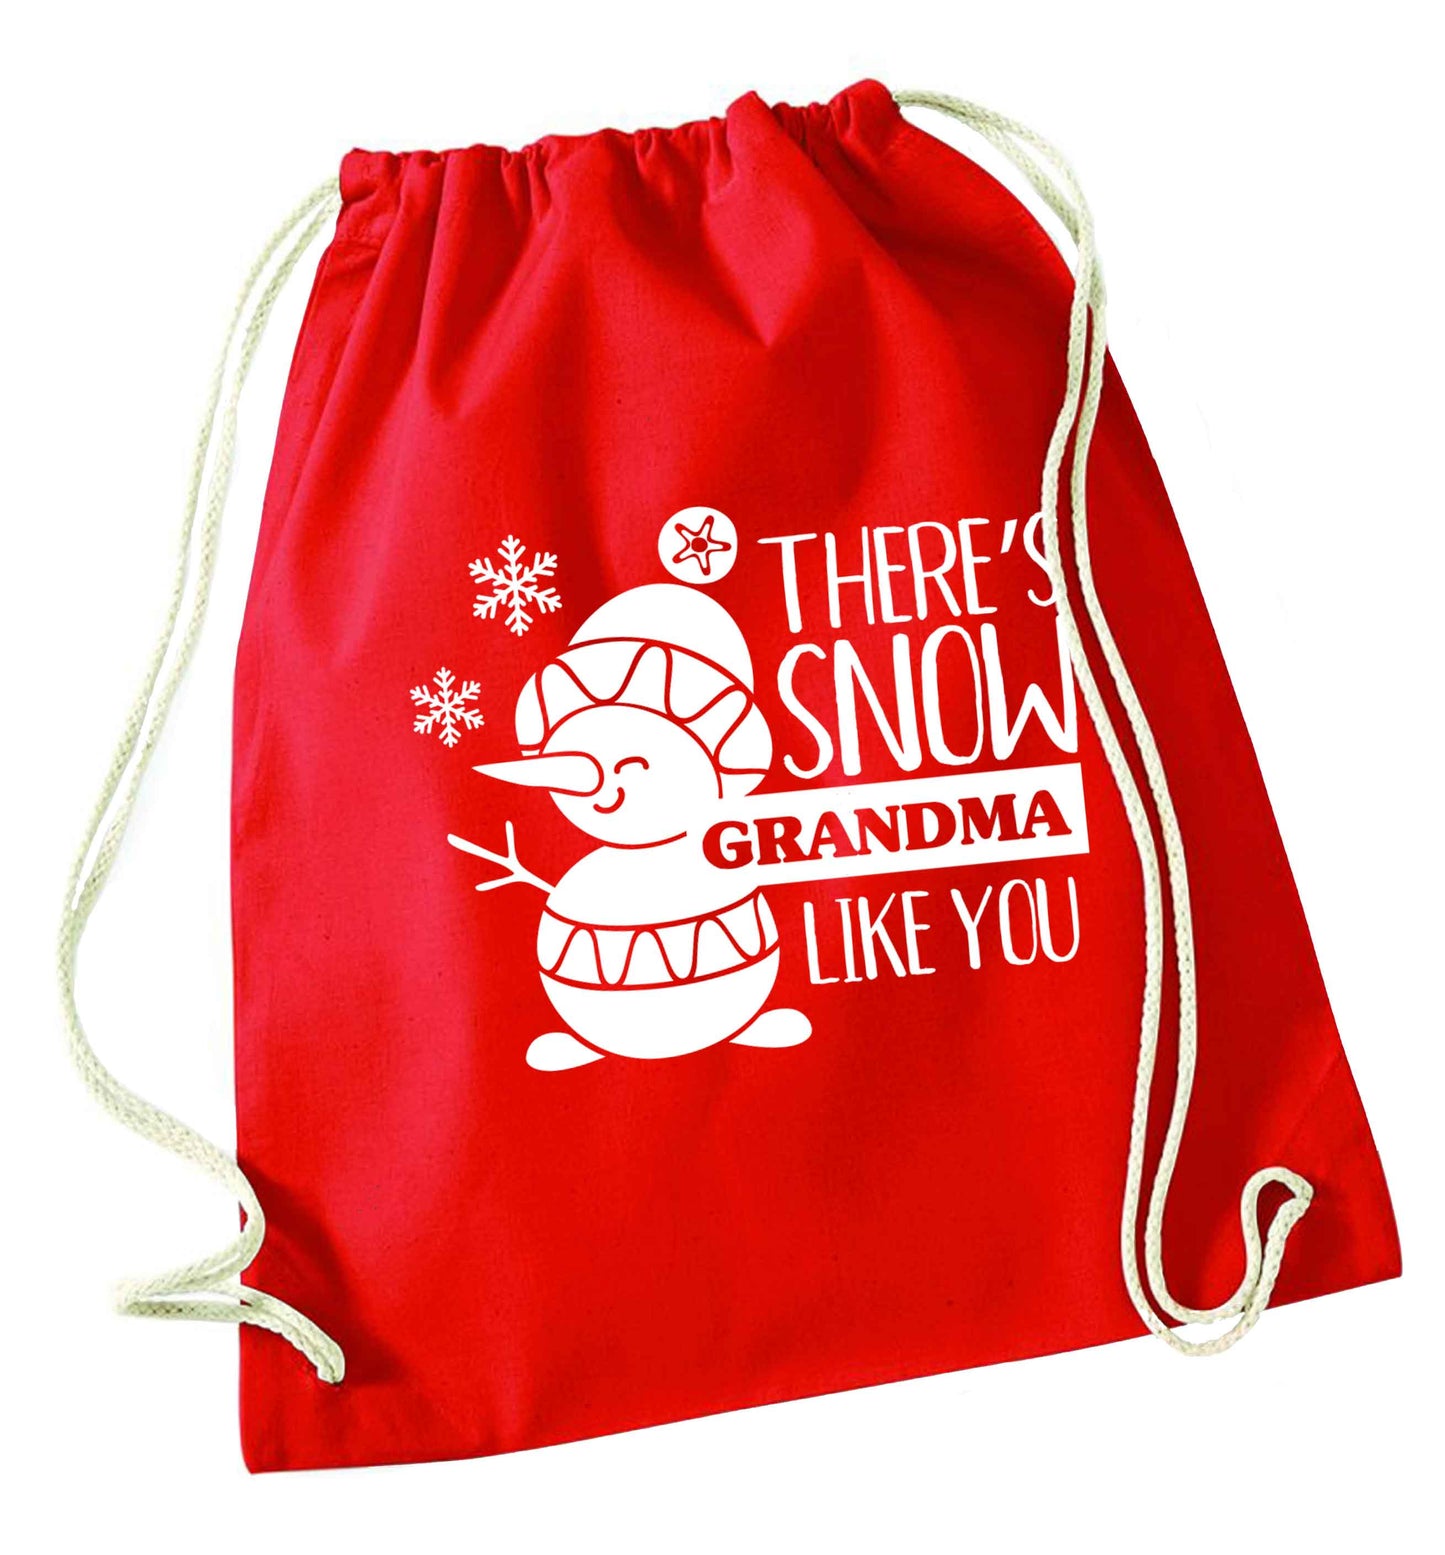 There's snow grandma like you red drawstring bag 